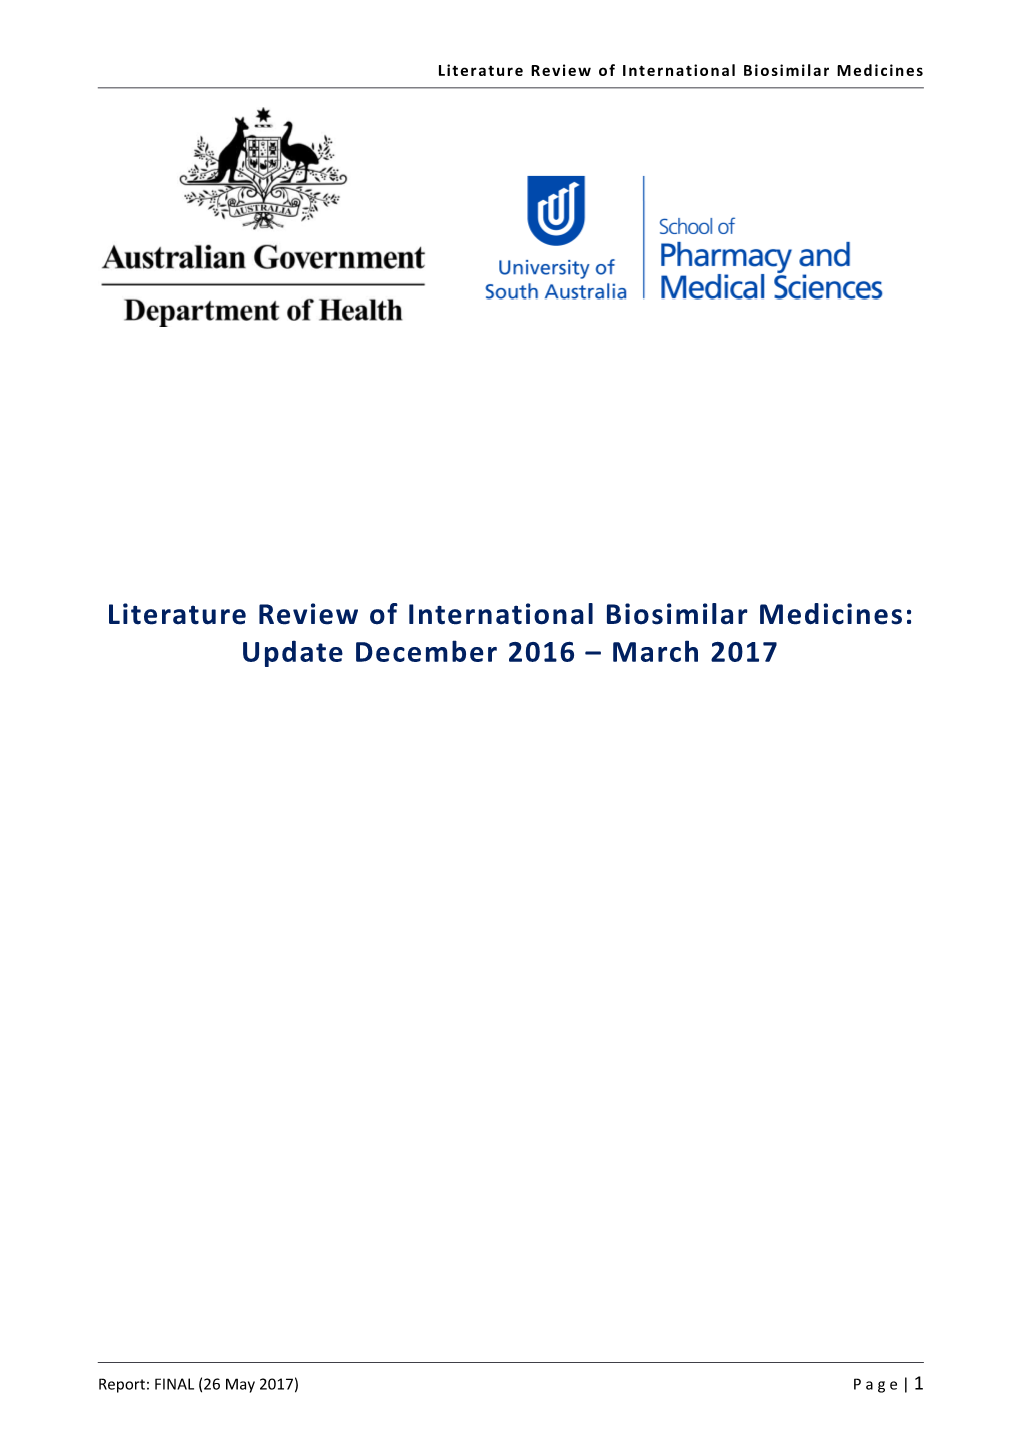 Literature Review of International Biosimilar Medicines